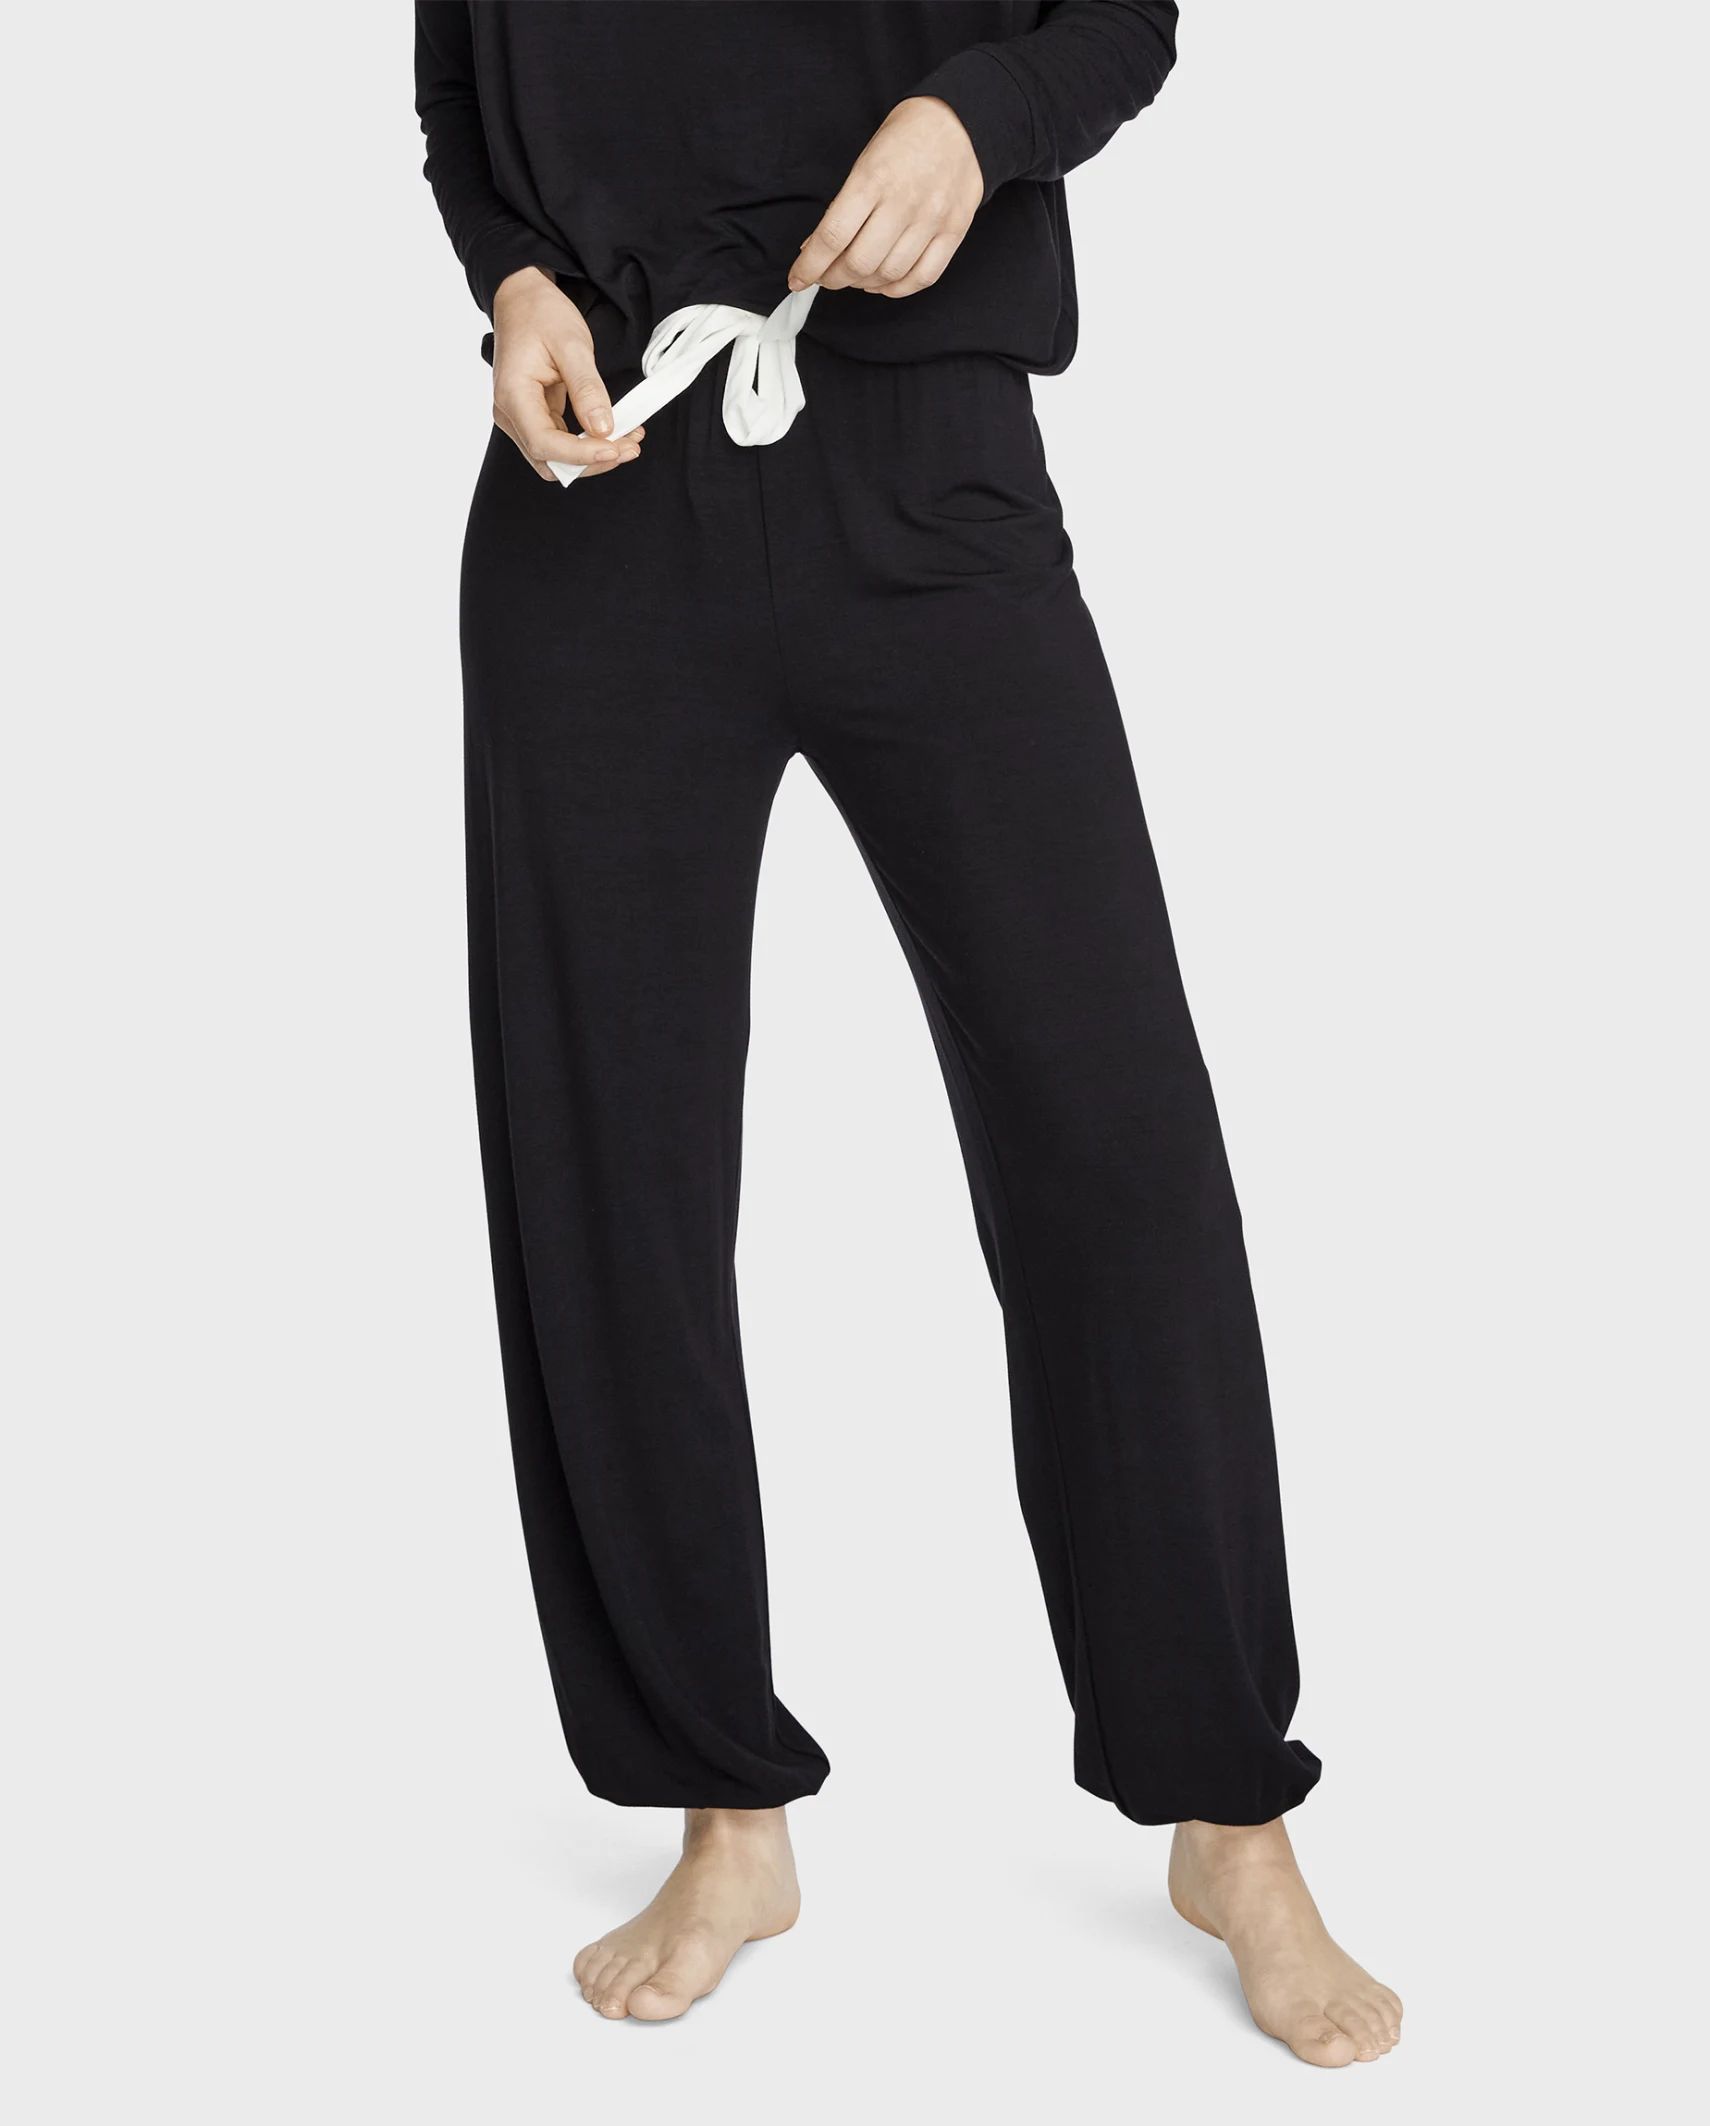 Womens Tie-Front Modal Pajama Pants - black | PJ Place